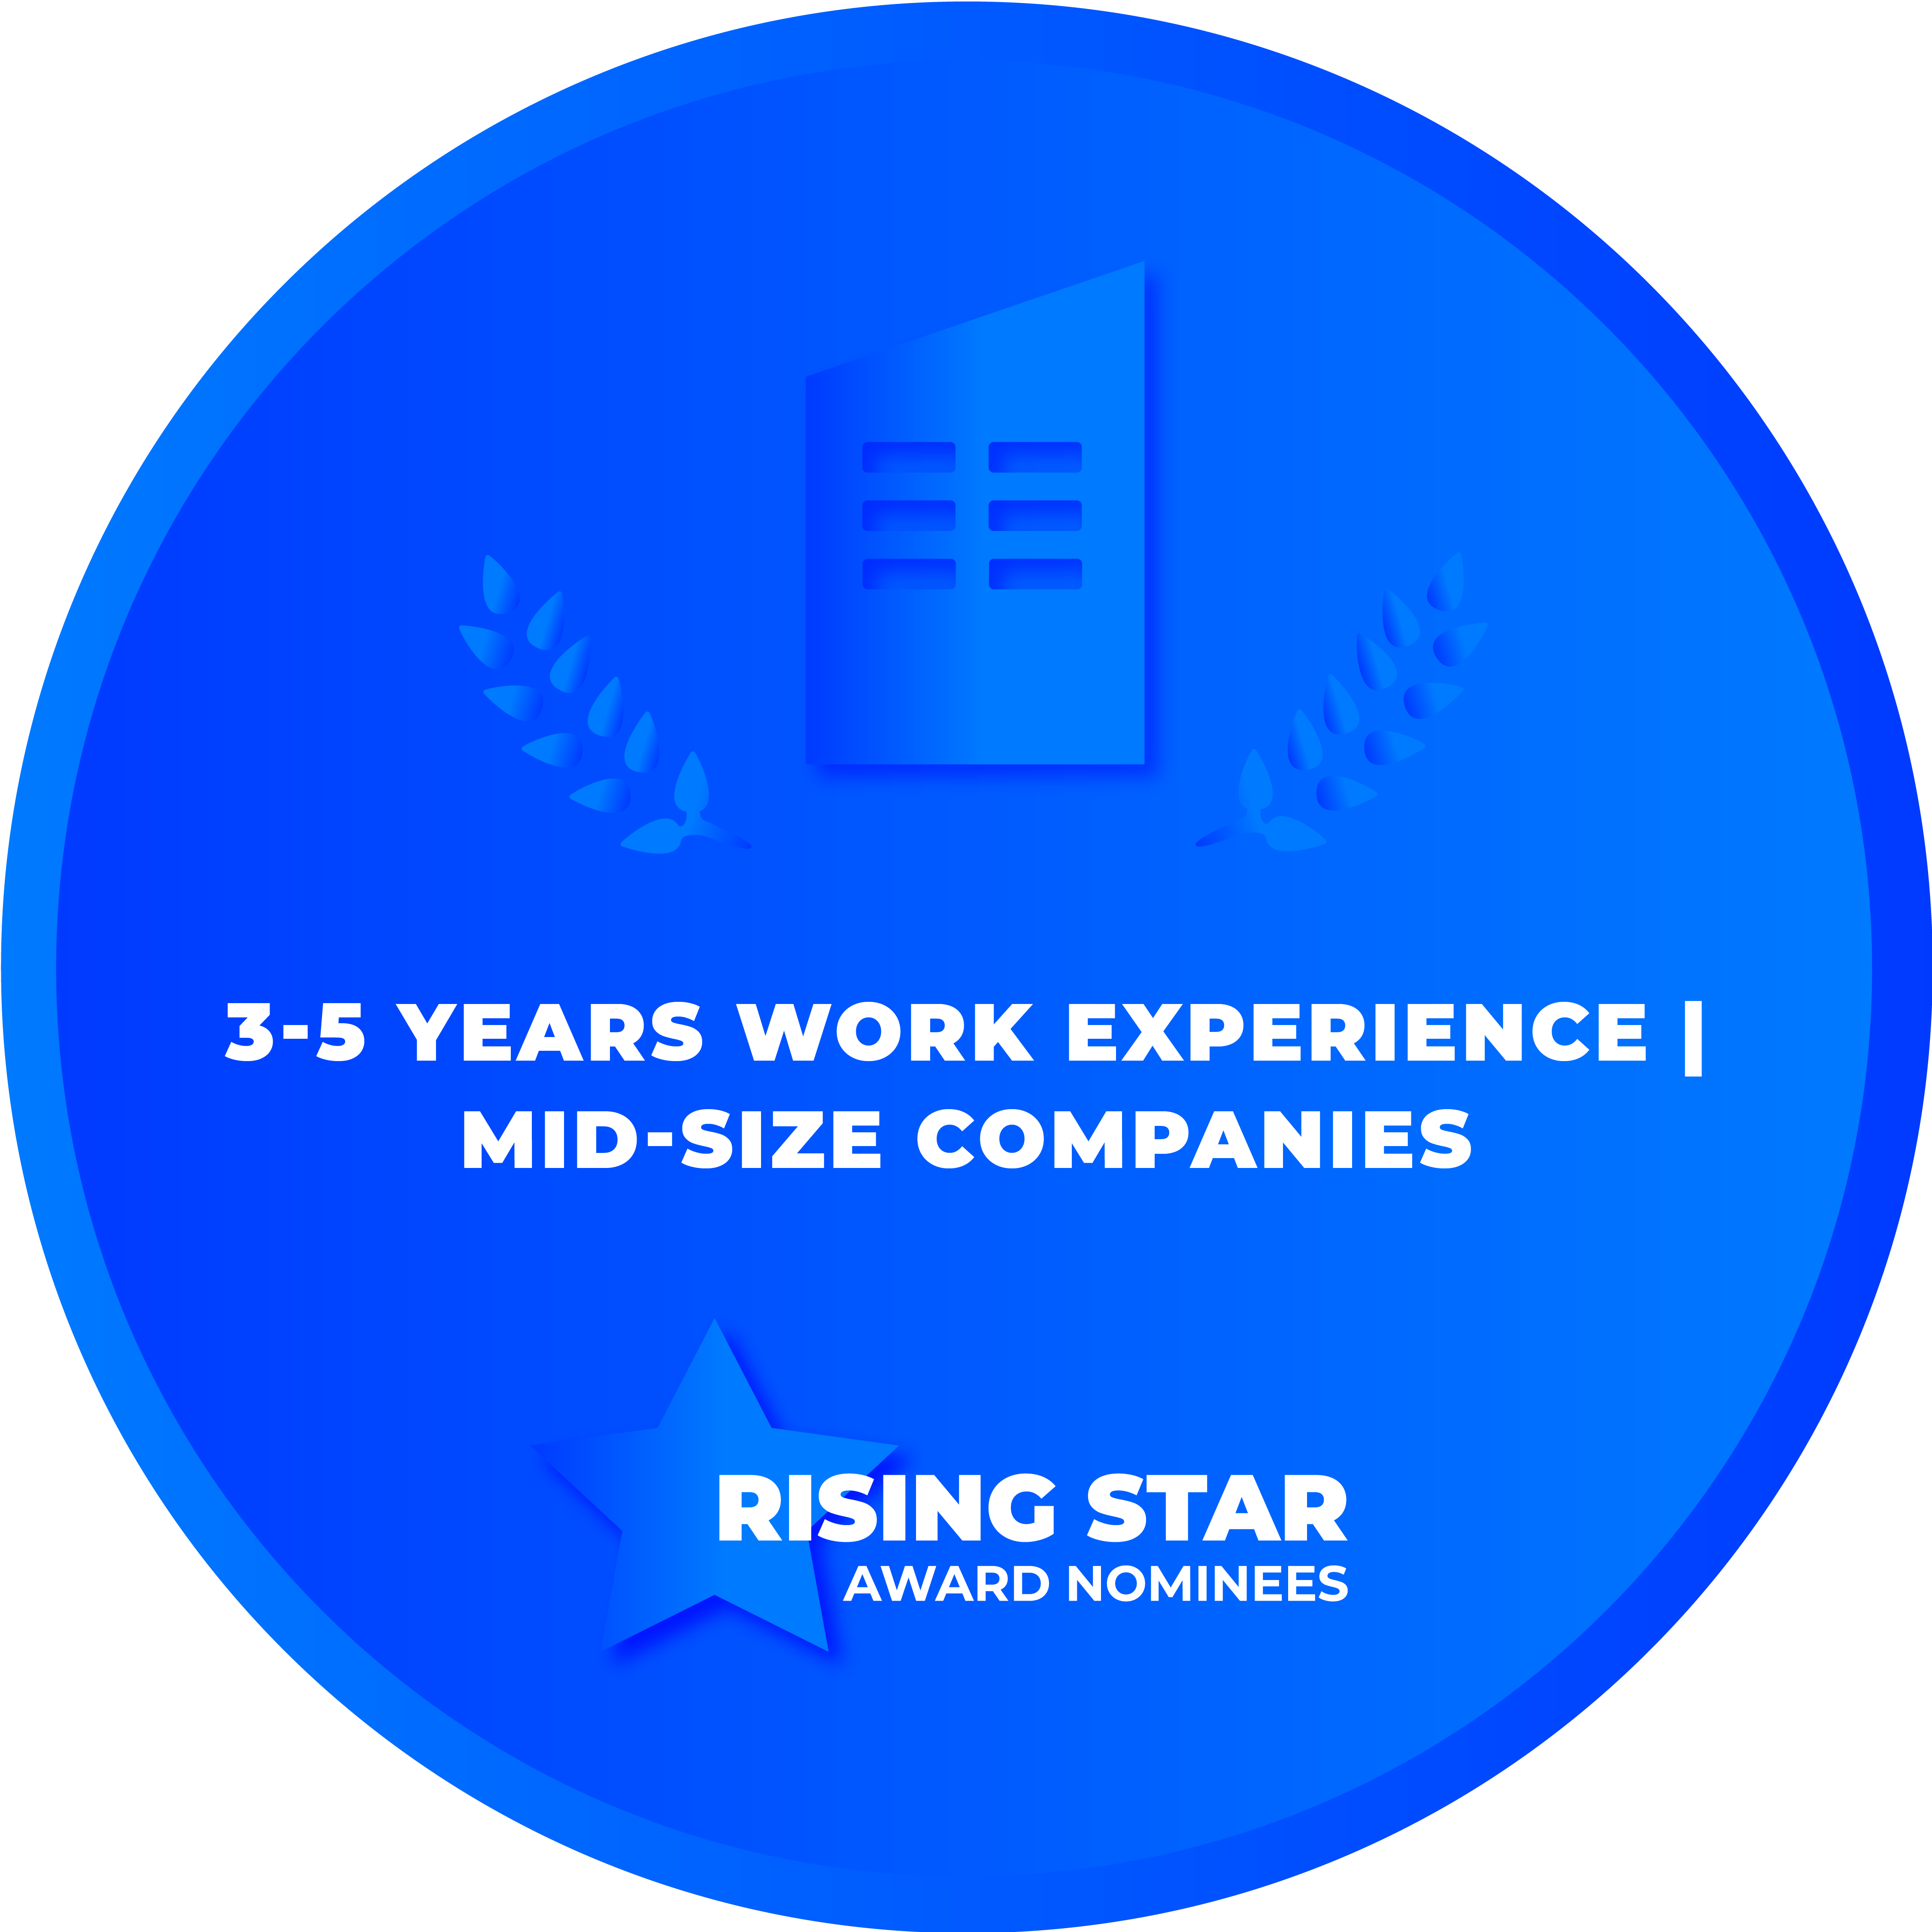 CRCA 2022 - RISING STAR AWARD - 3-5 Years Work Experience Mid-Size Companies